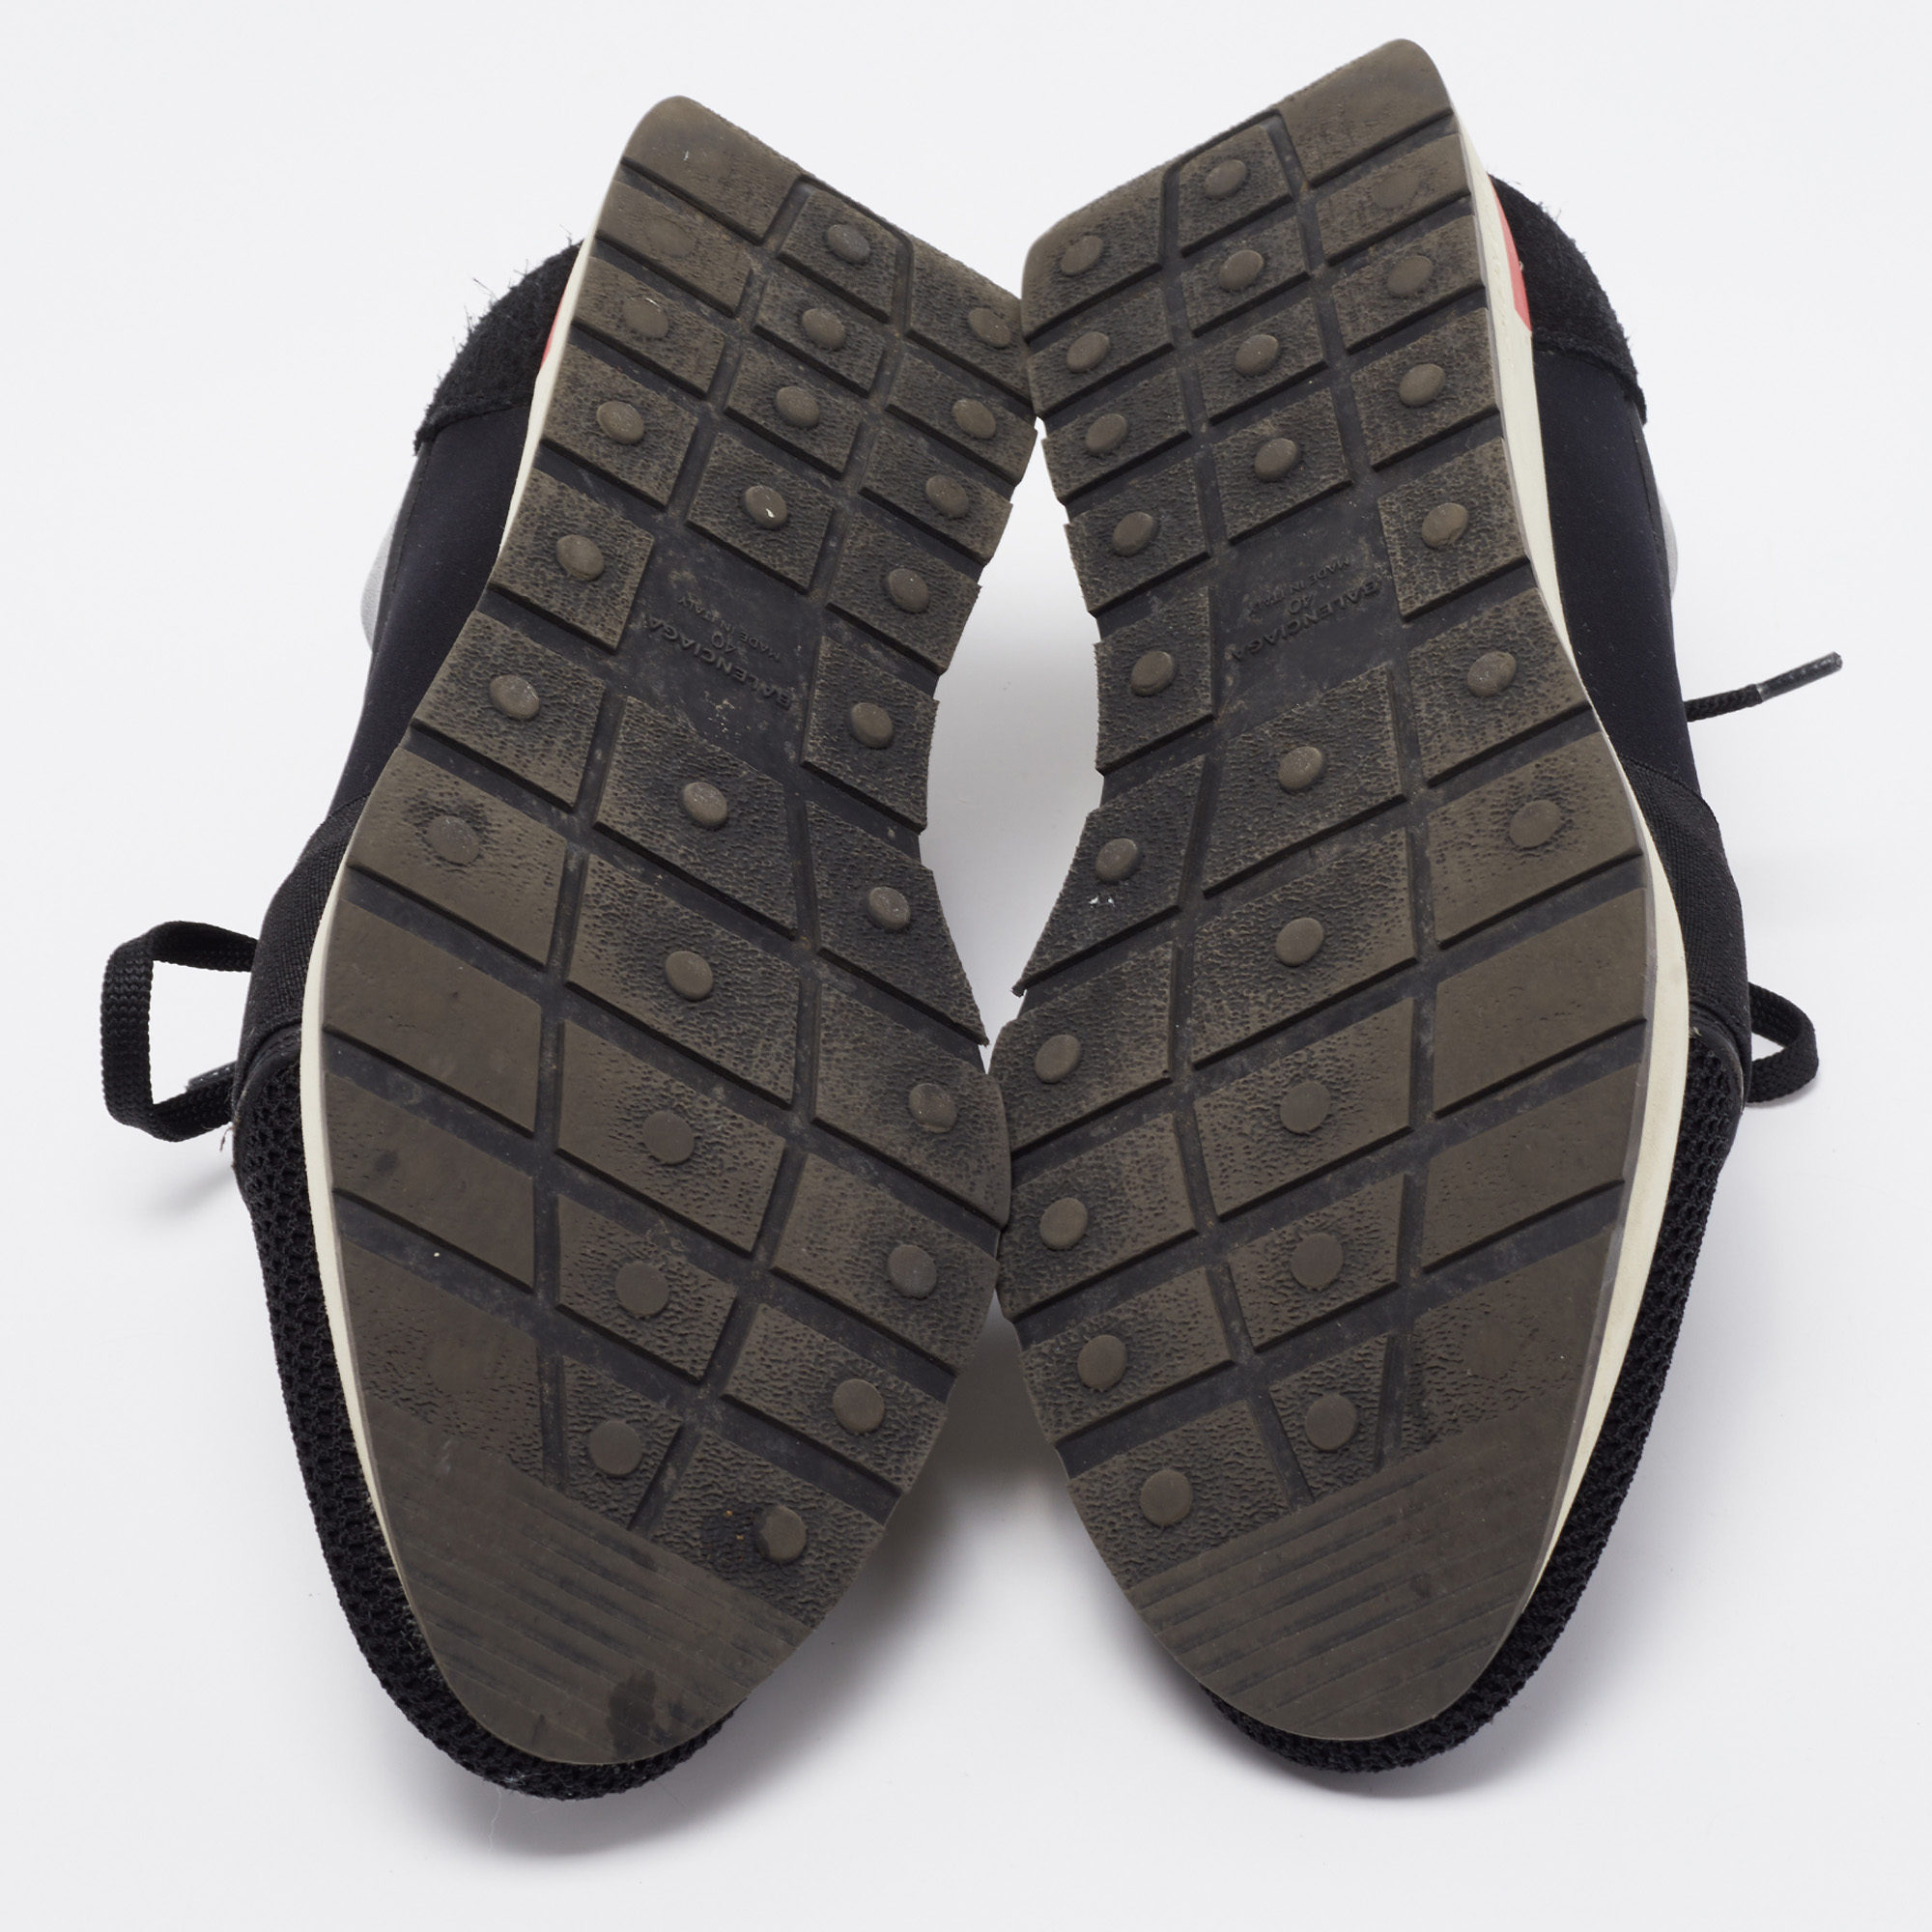 Balenciaga Black Leather, Mesh Race Runner Sneakers Size 40